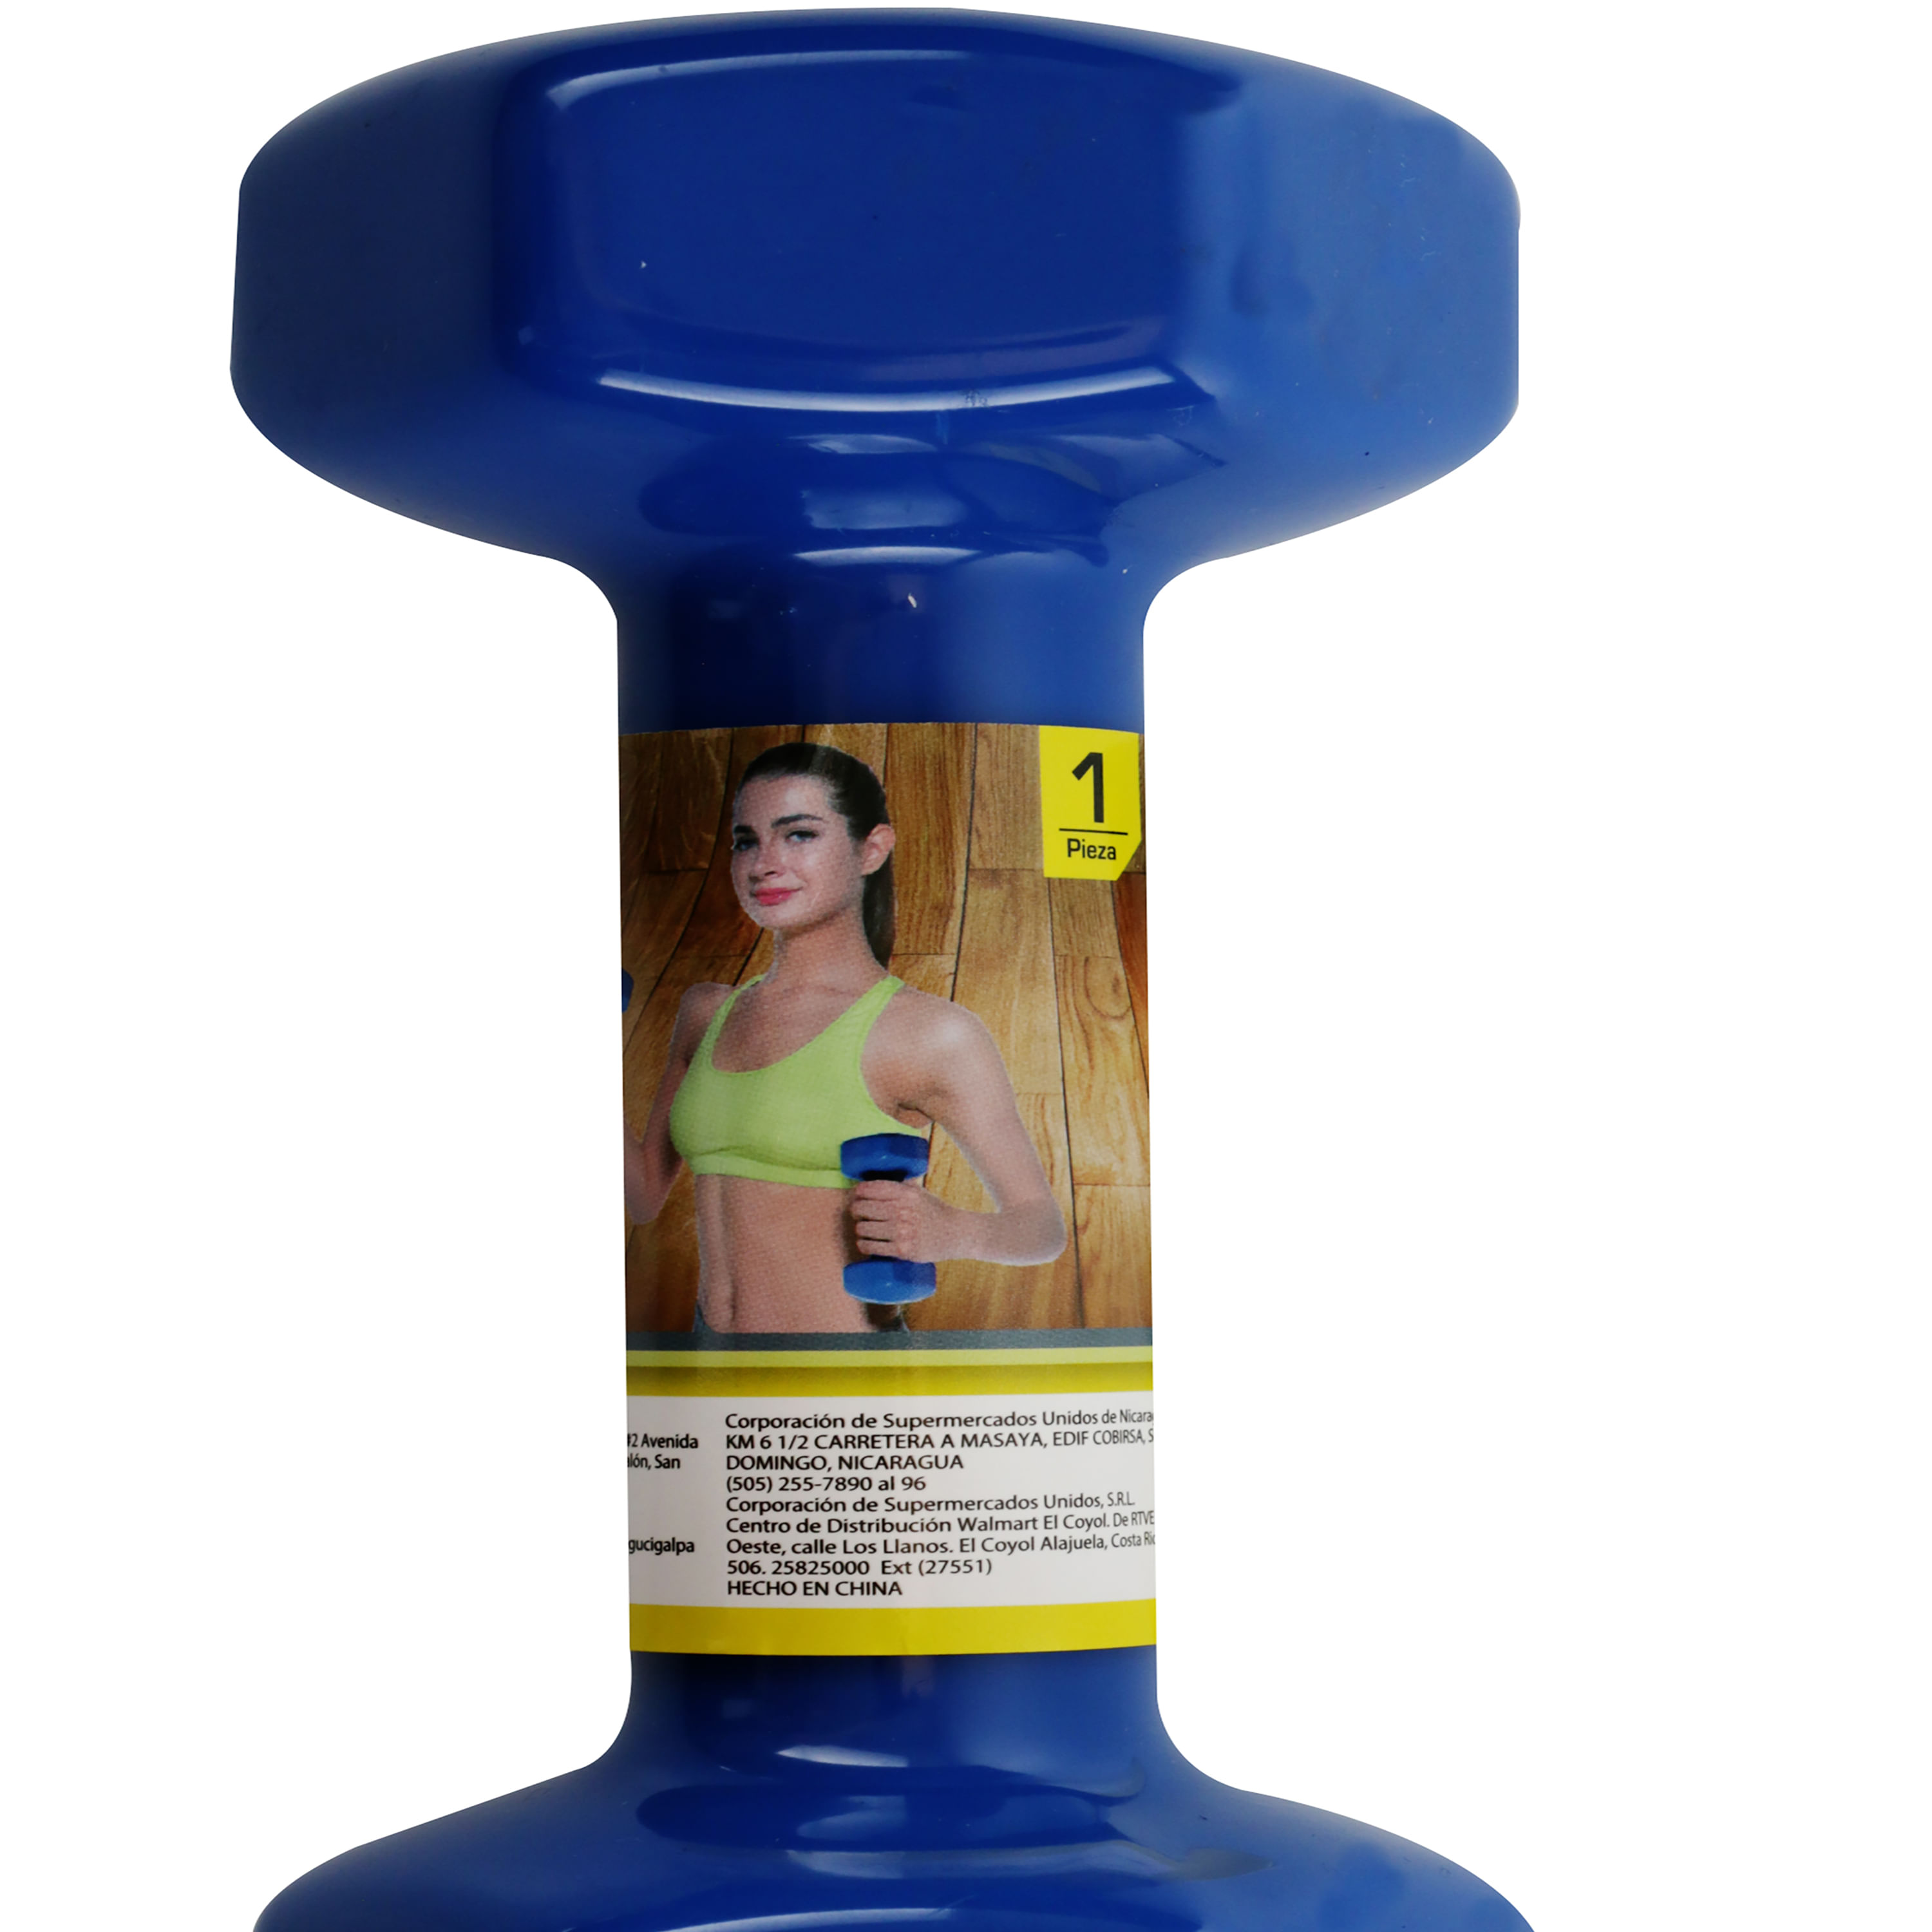 Comprar Mat Athletic Works De Yoga - 173X61cm - 10mm | Walmart Nicaragua